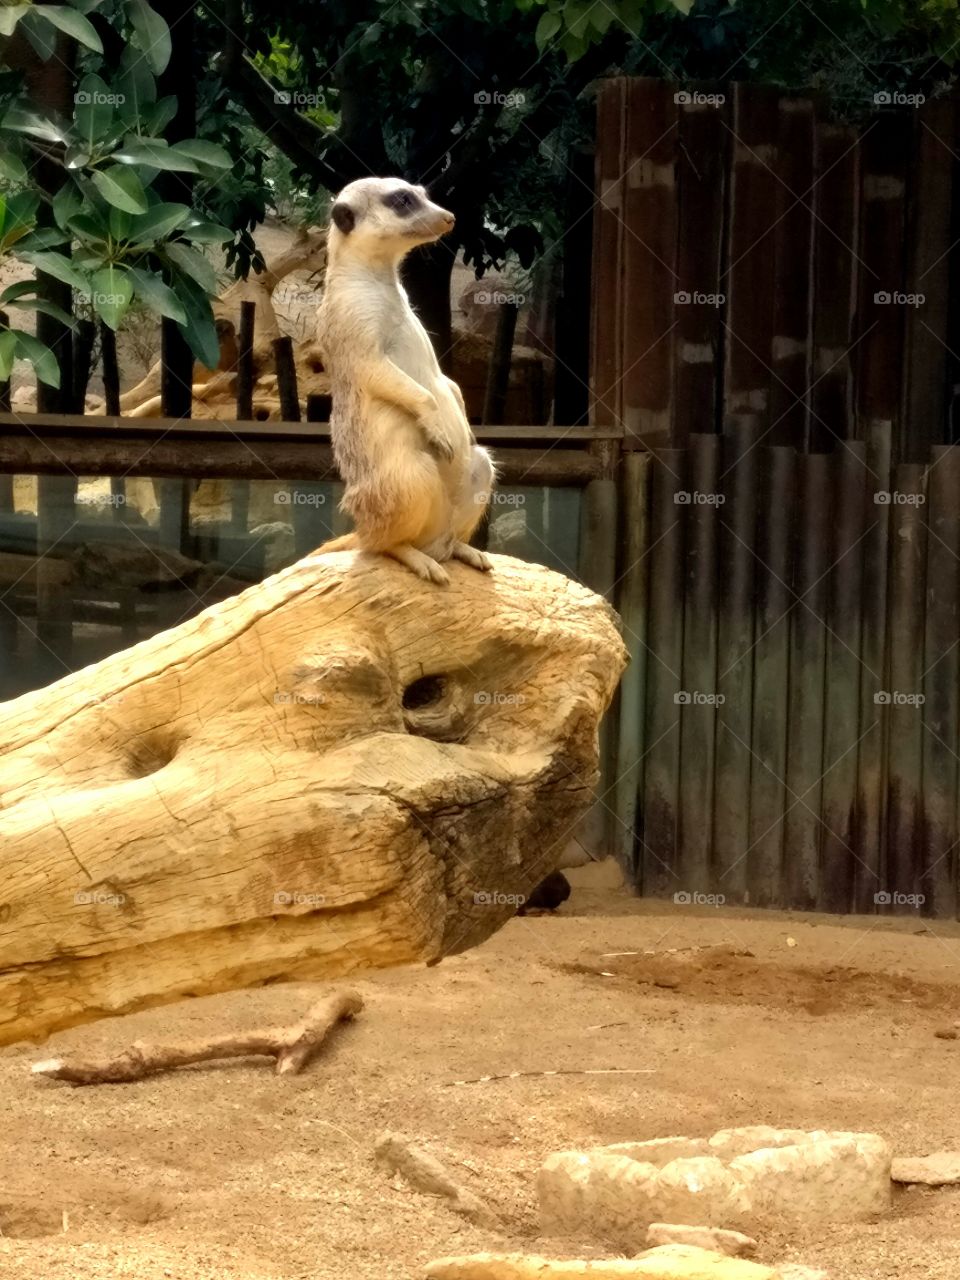 "I like to move It move It!" Lemur